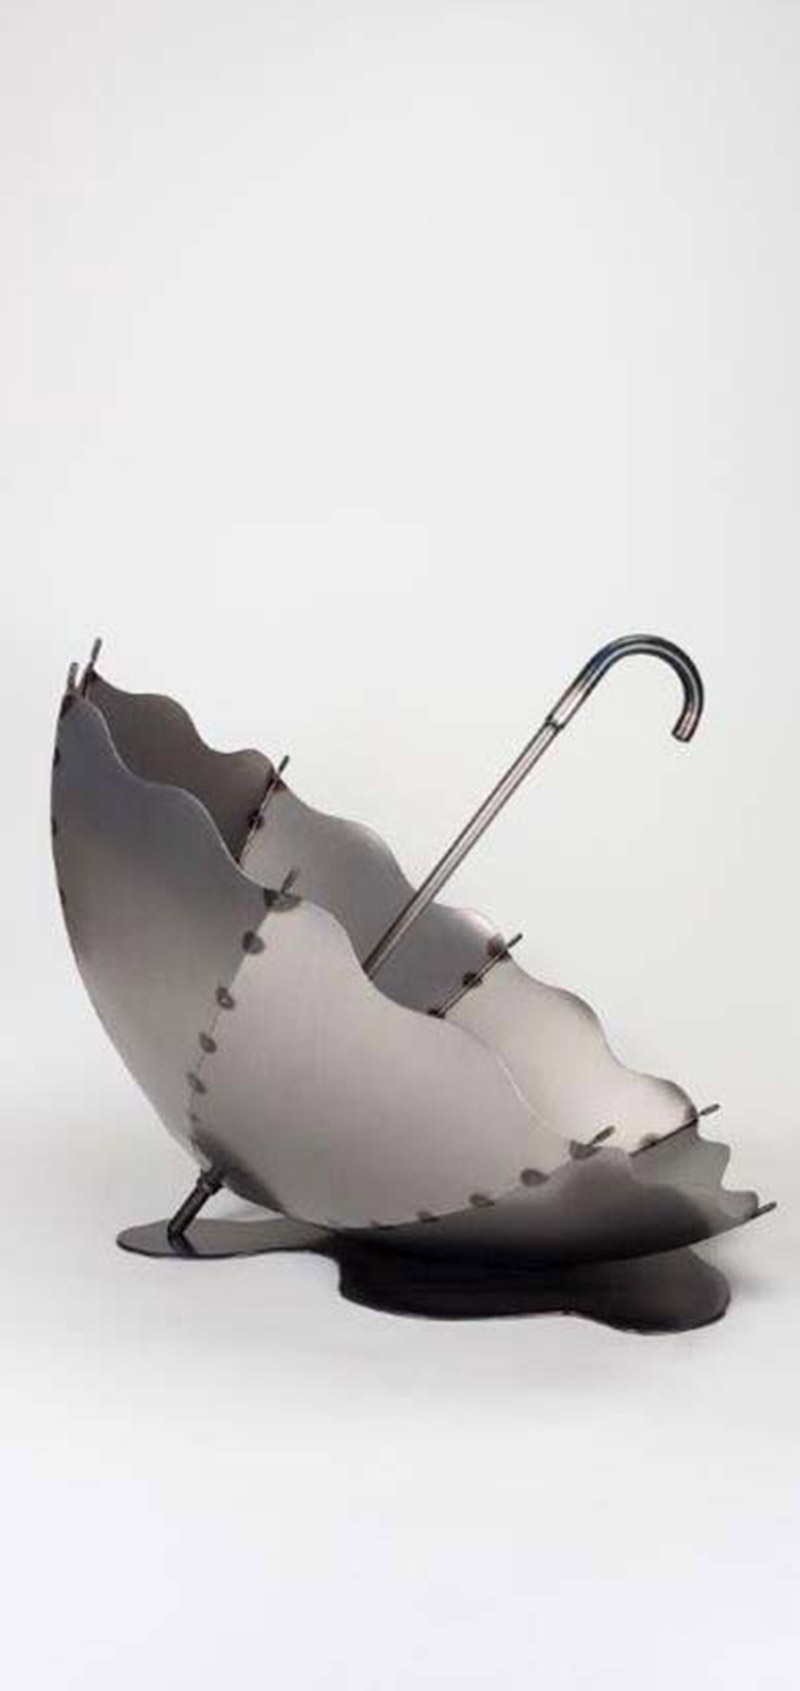 bespoke metalwork-Umbrella